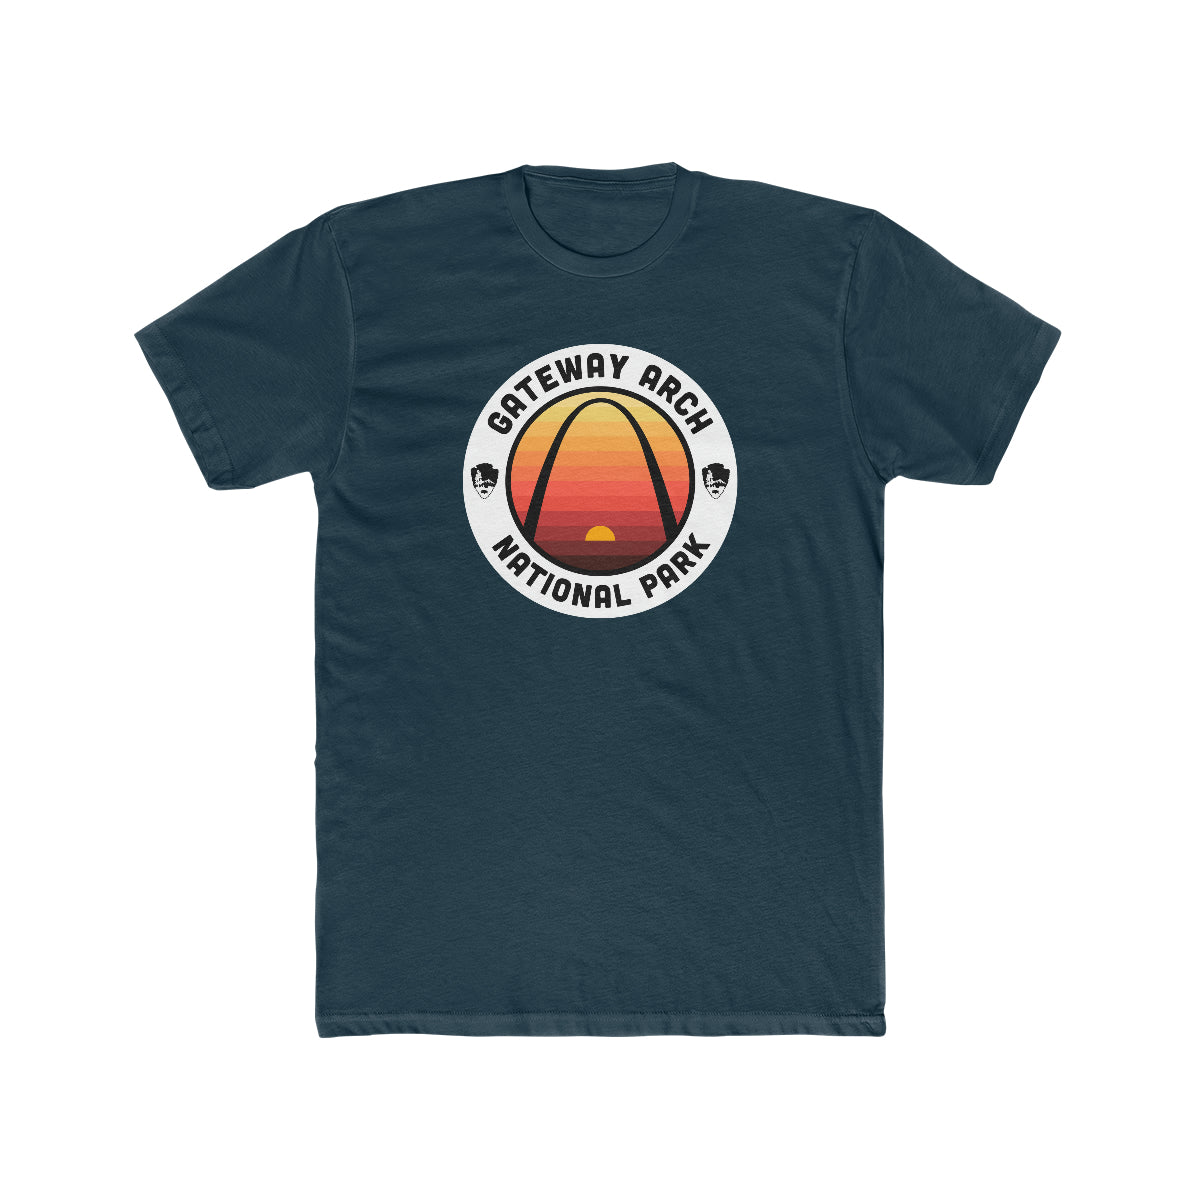 Gateway Arch National Park T-Shirt - Round Badge Design